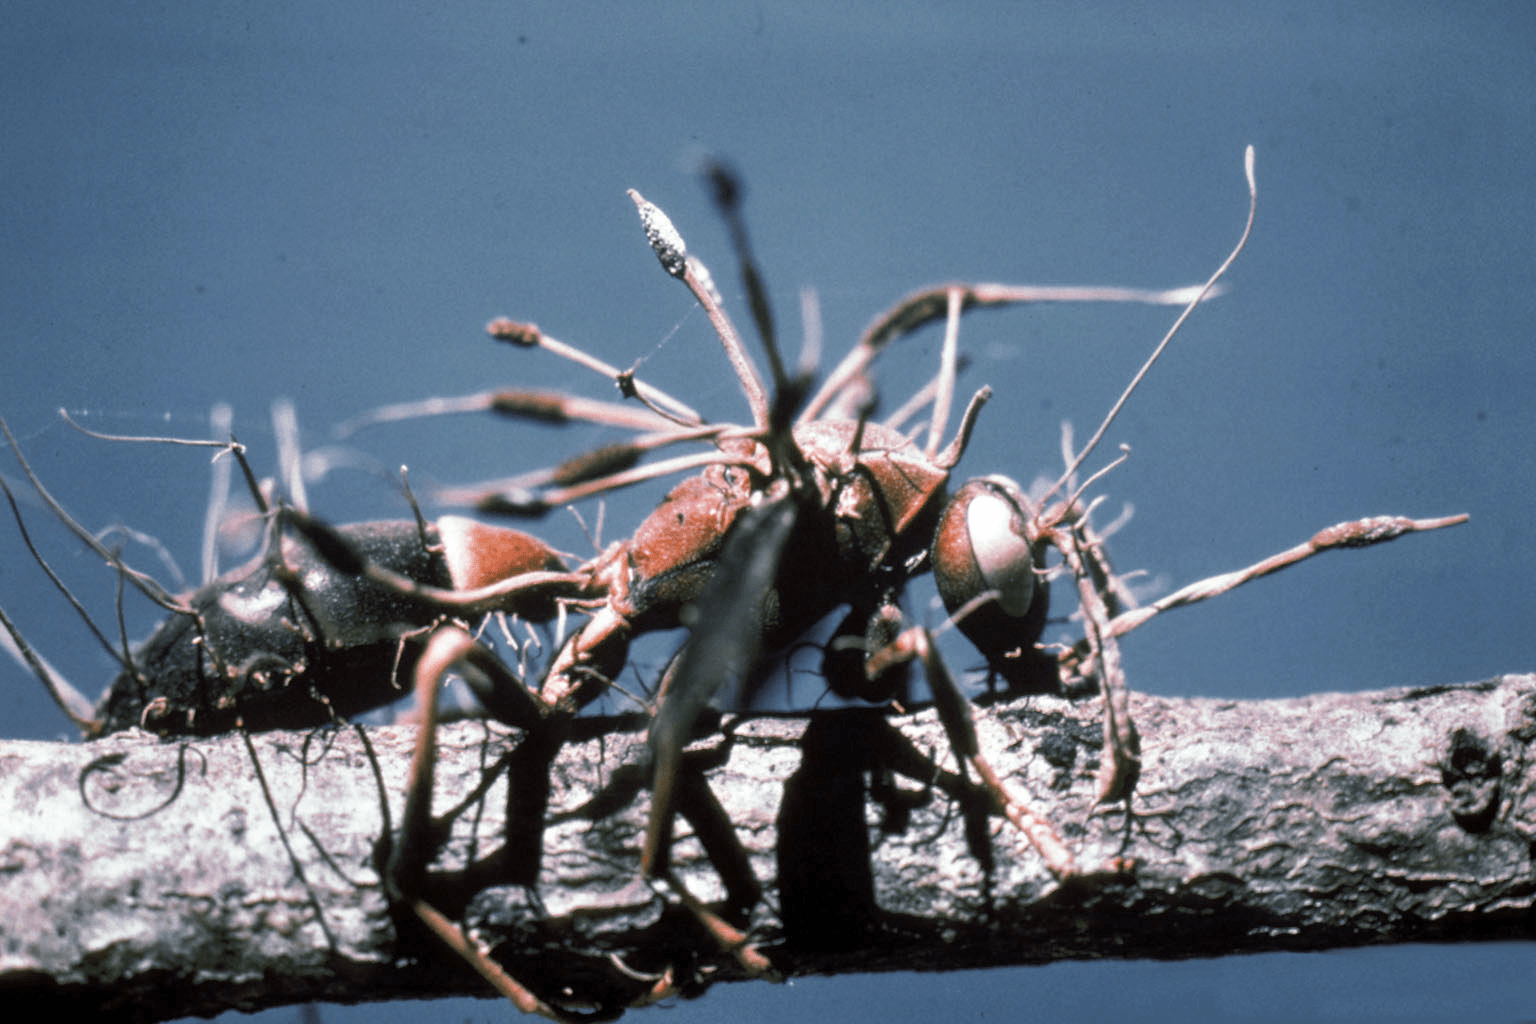 avispa cordyceps hongos patogenos